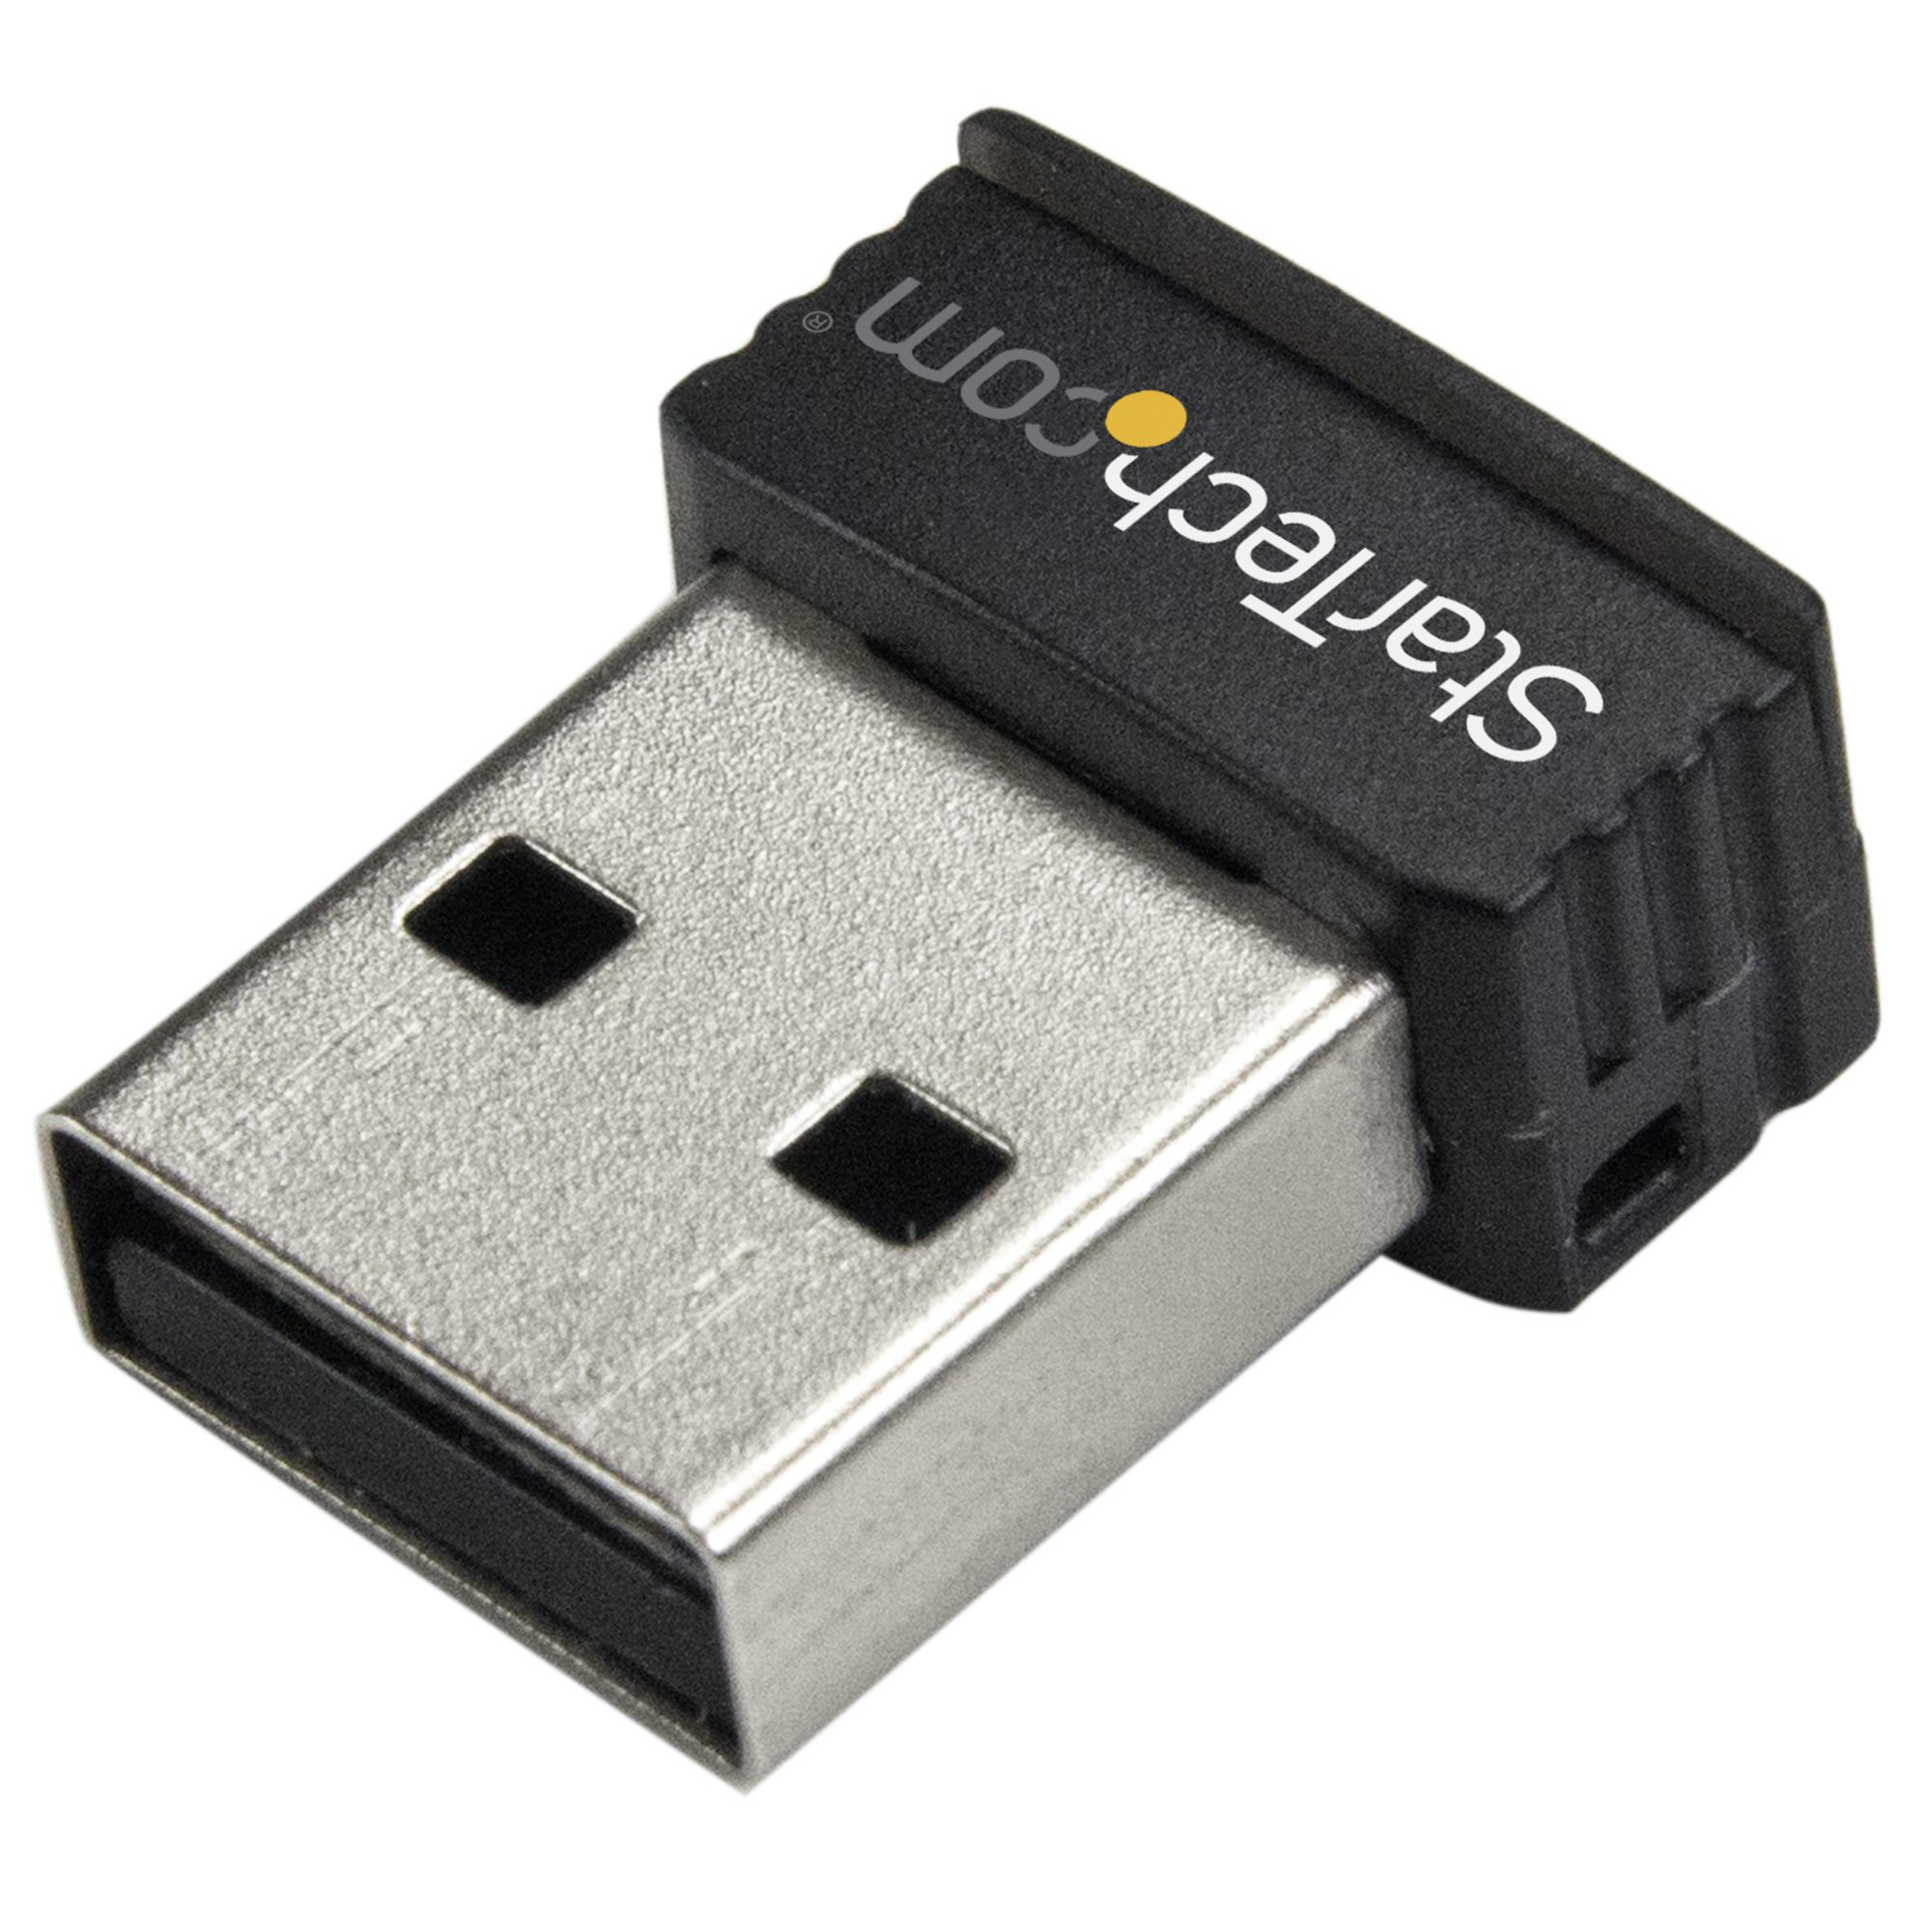 150Mbps USB WiFi Wireless Adapter 802.11n/g/b 150M PC Computer Network LAN Card 